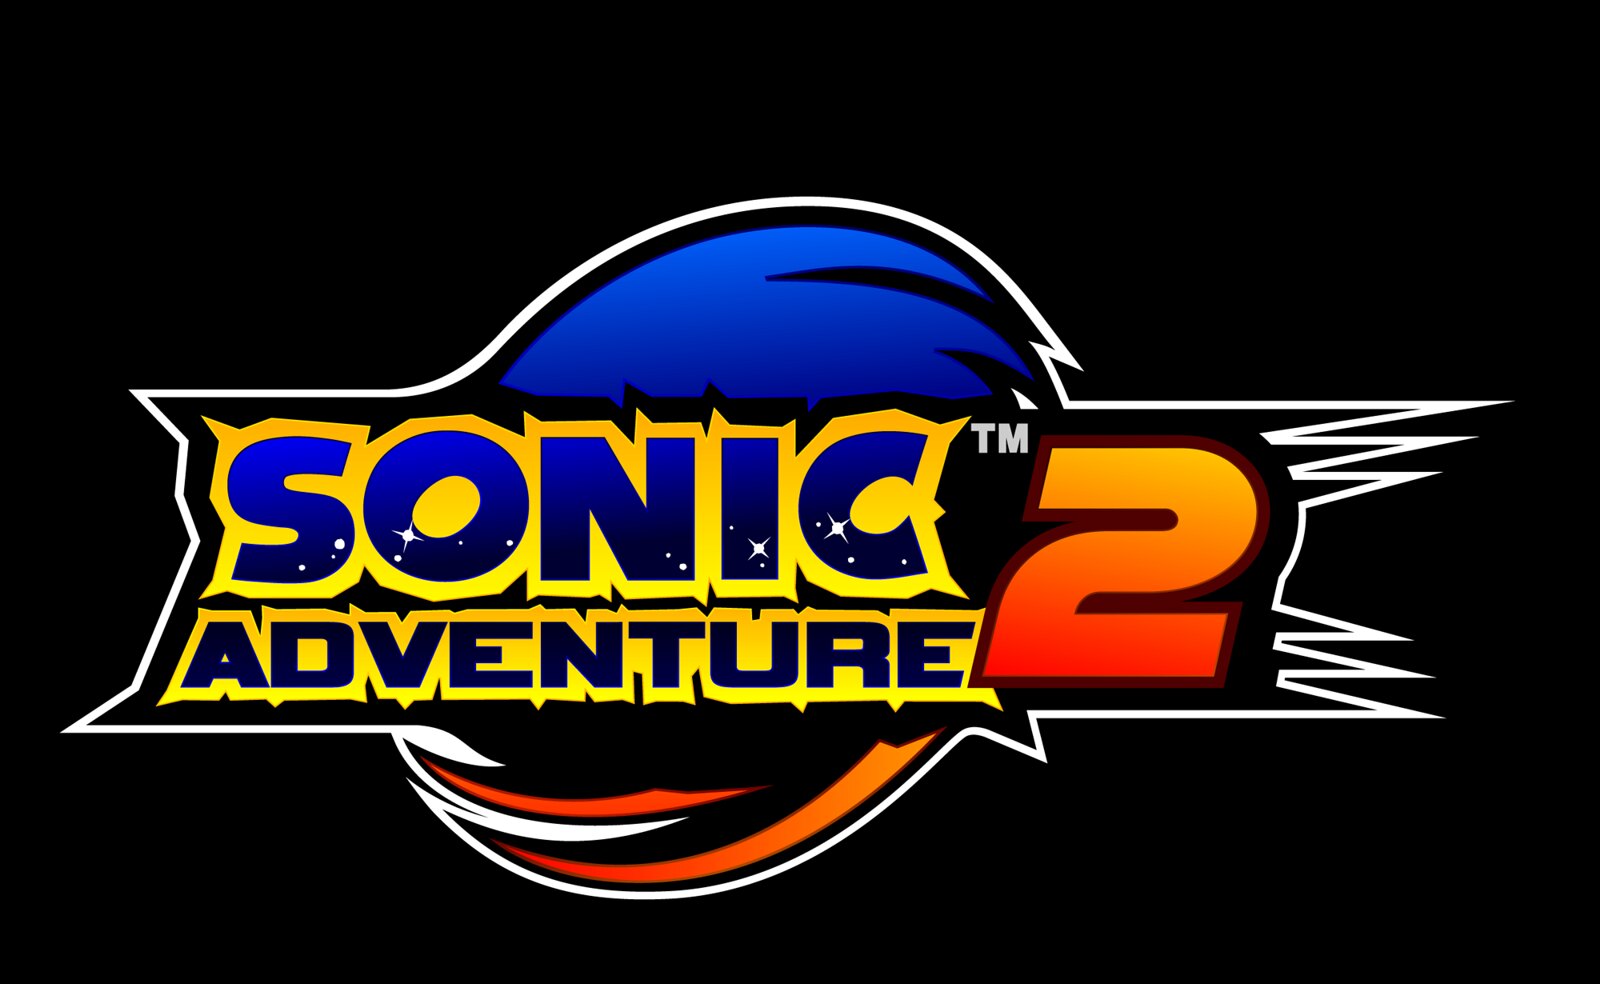 Live and learn sonic. Соник адвенчер 2. Sonic Adventure. Sonic Adventure 2 Battle. Sonic Adventure 2 2001.